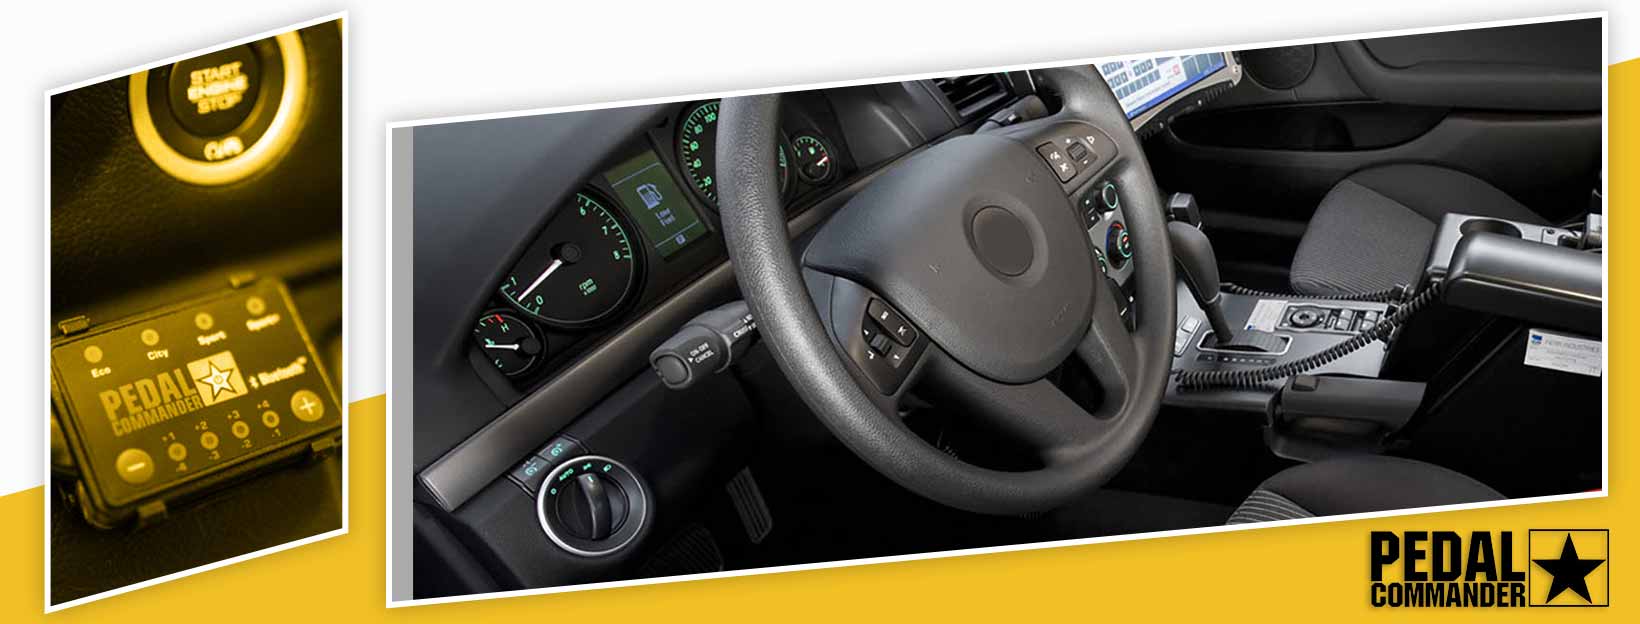 Pedal Commander for Chevrolet Caprice - interior